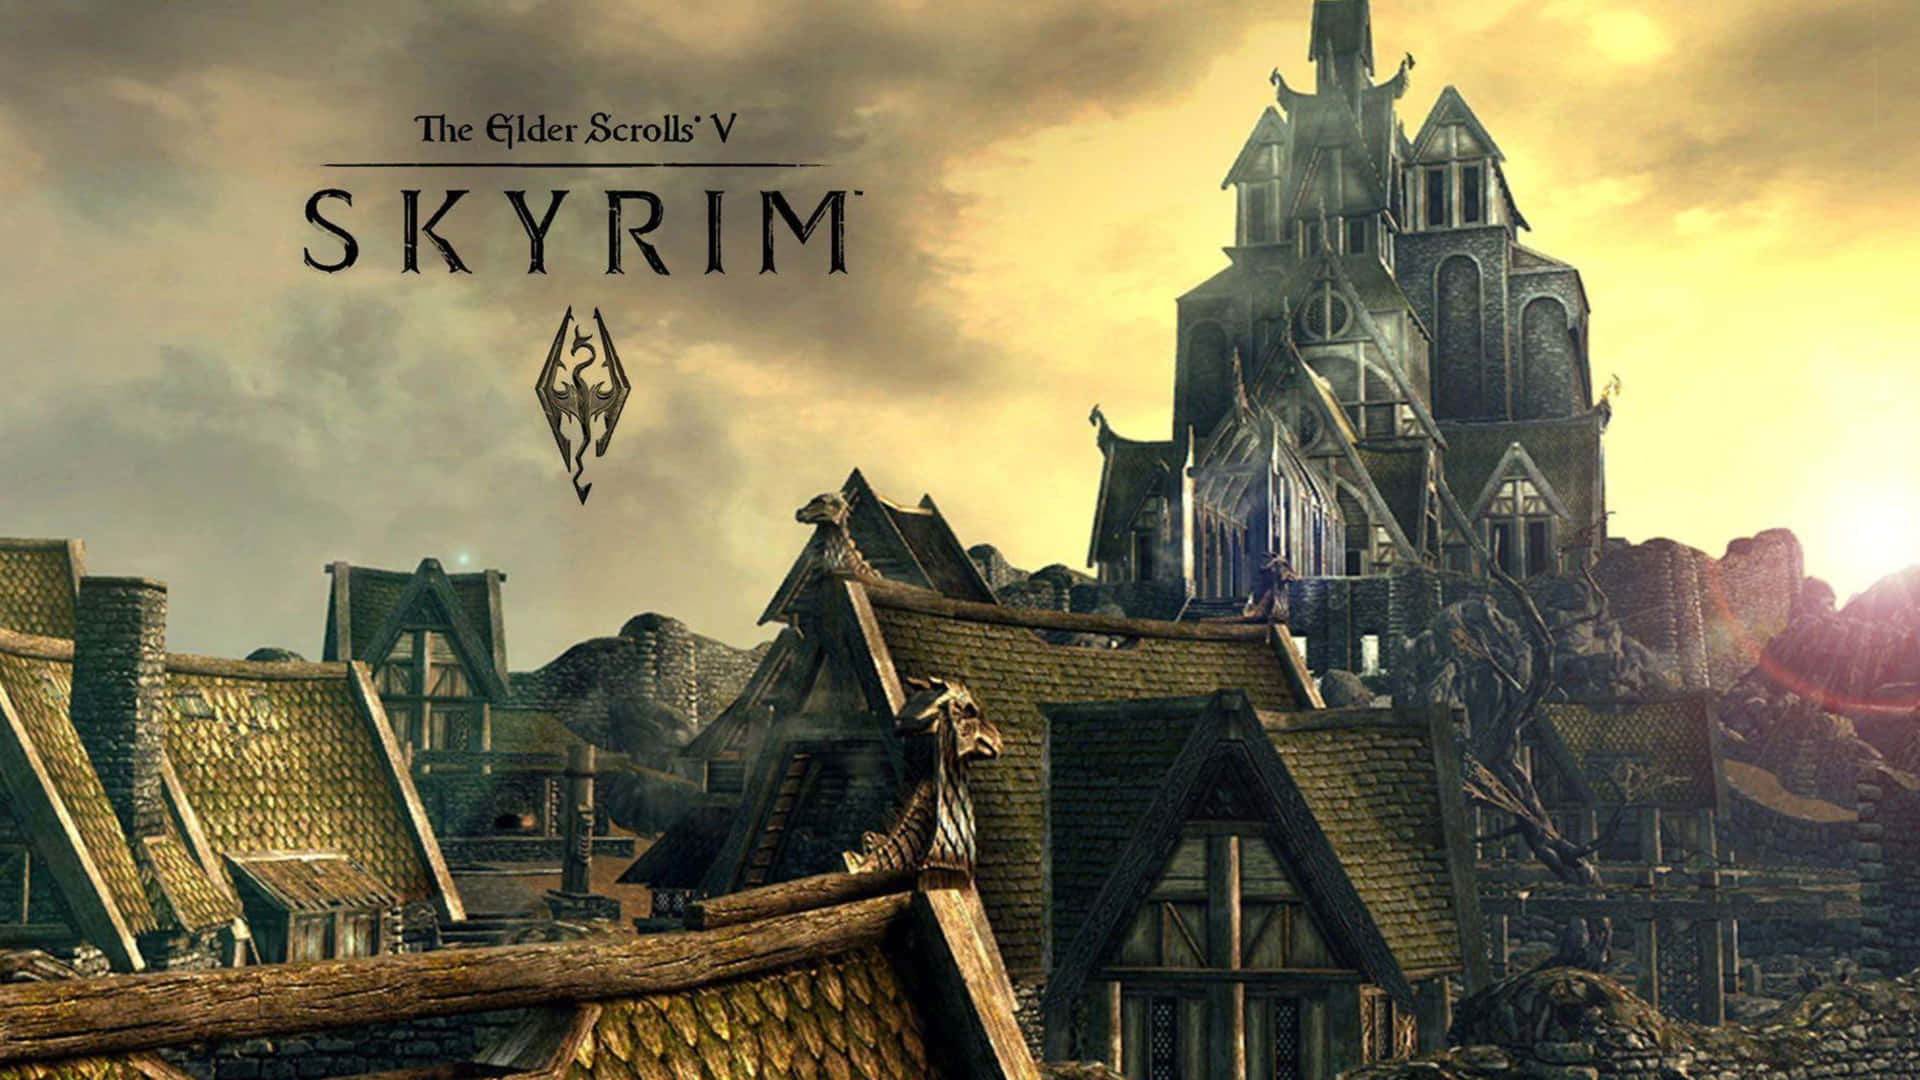 Dragonborn amidst the magical landscape of Skyrim